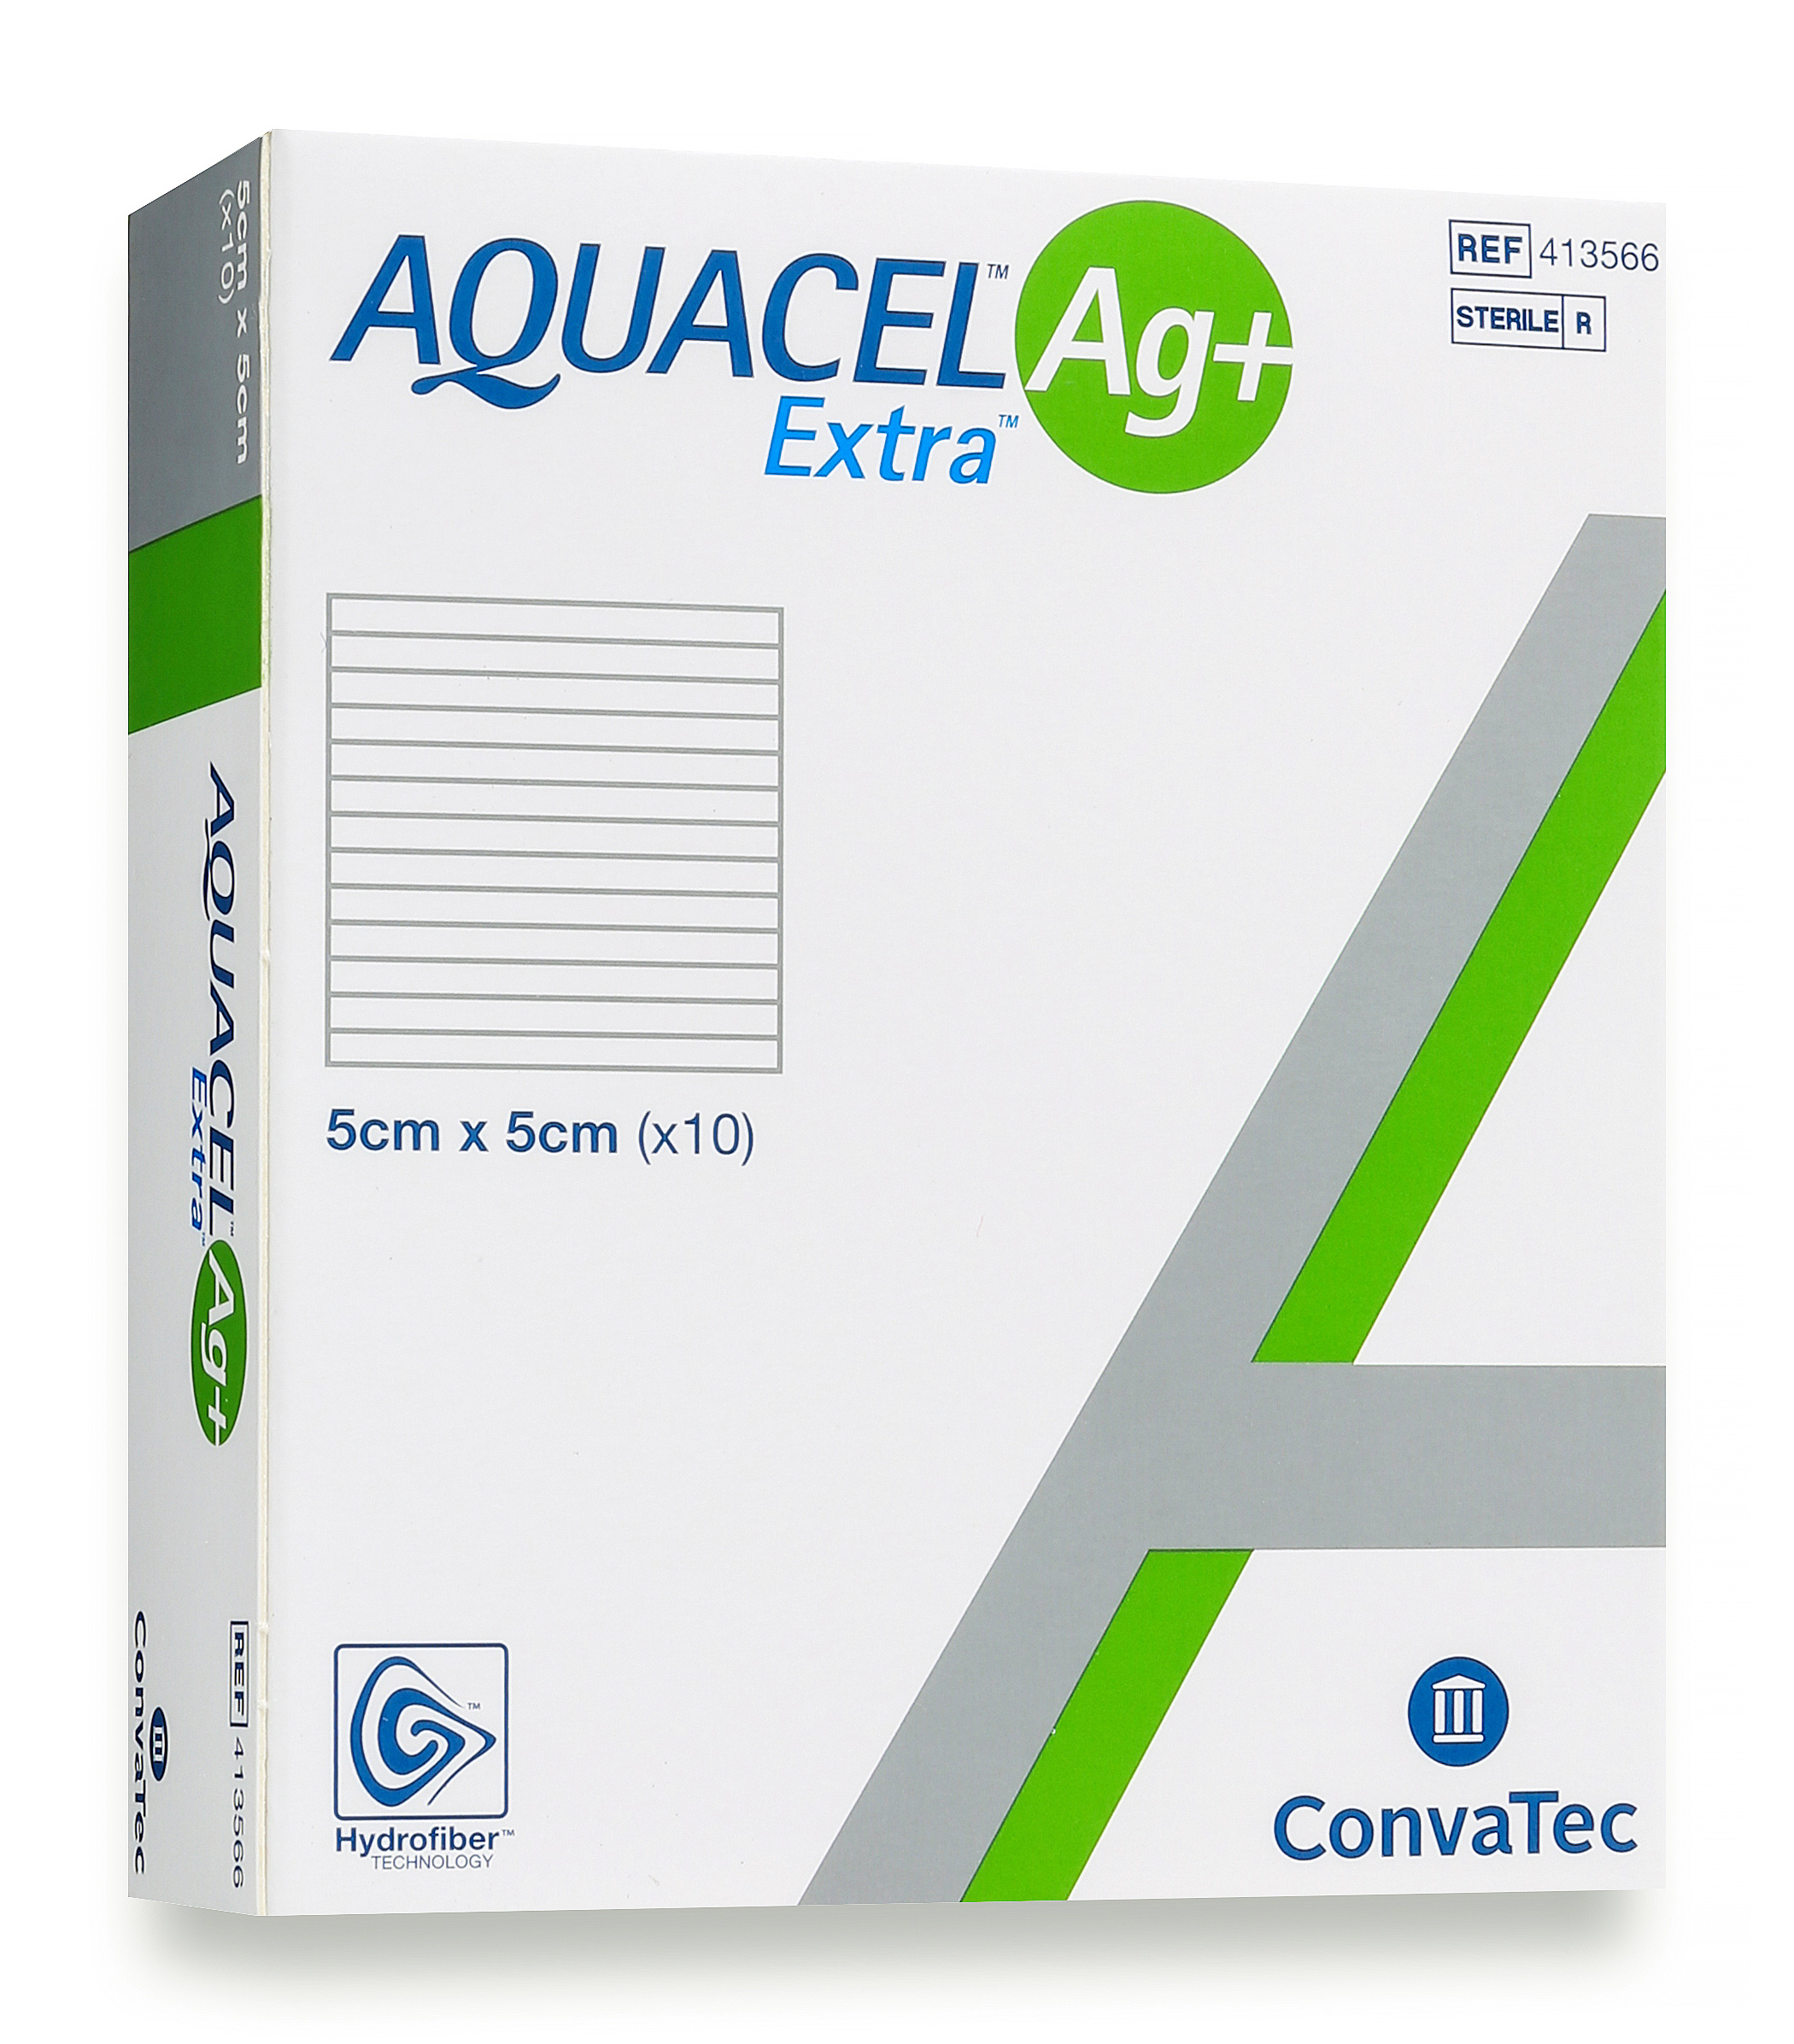 Aquacel Silver Dressing AG+ Extra 5cm x 5cm